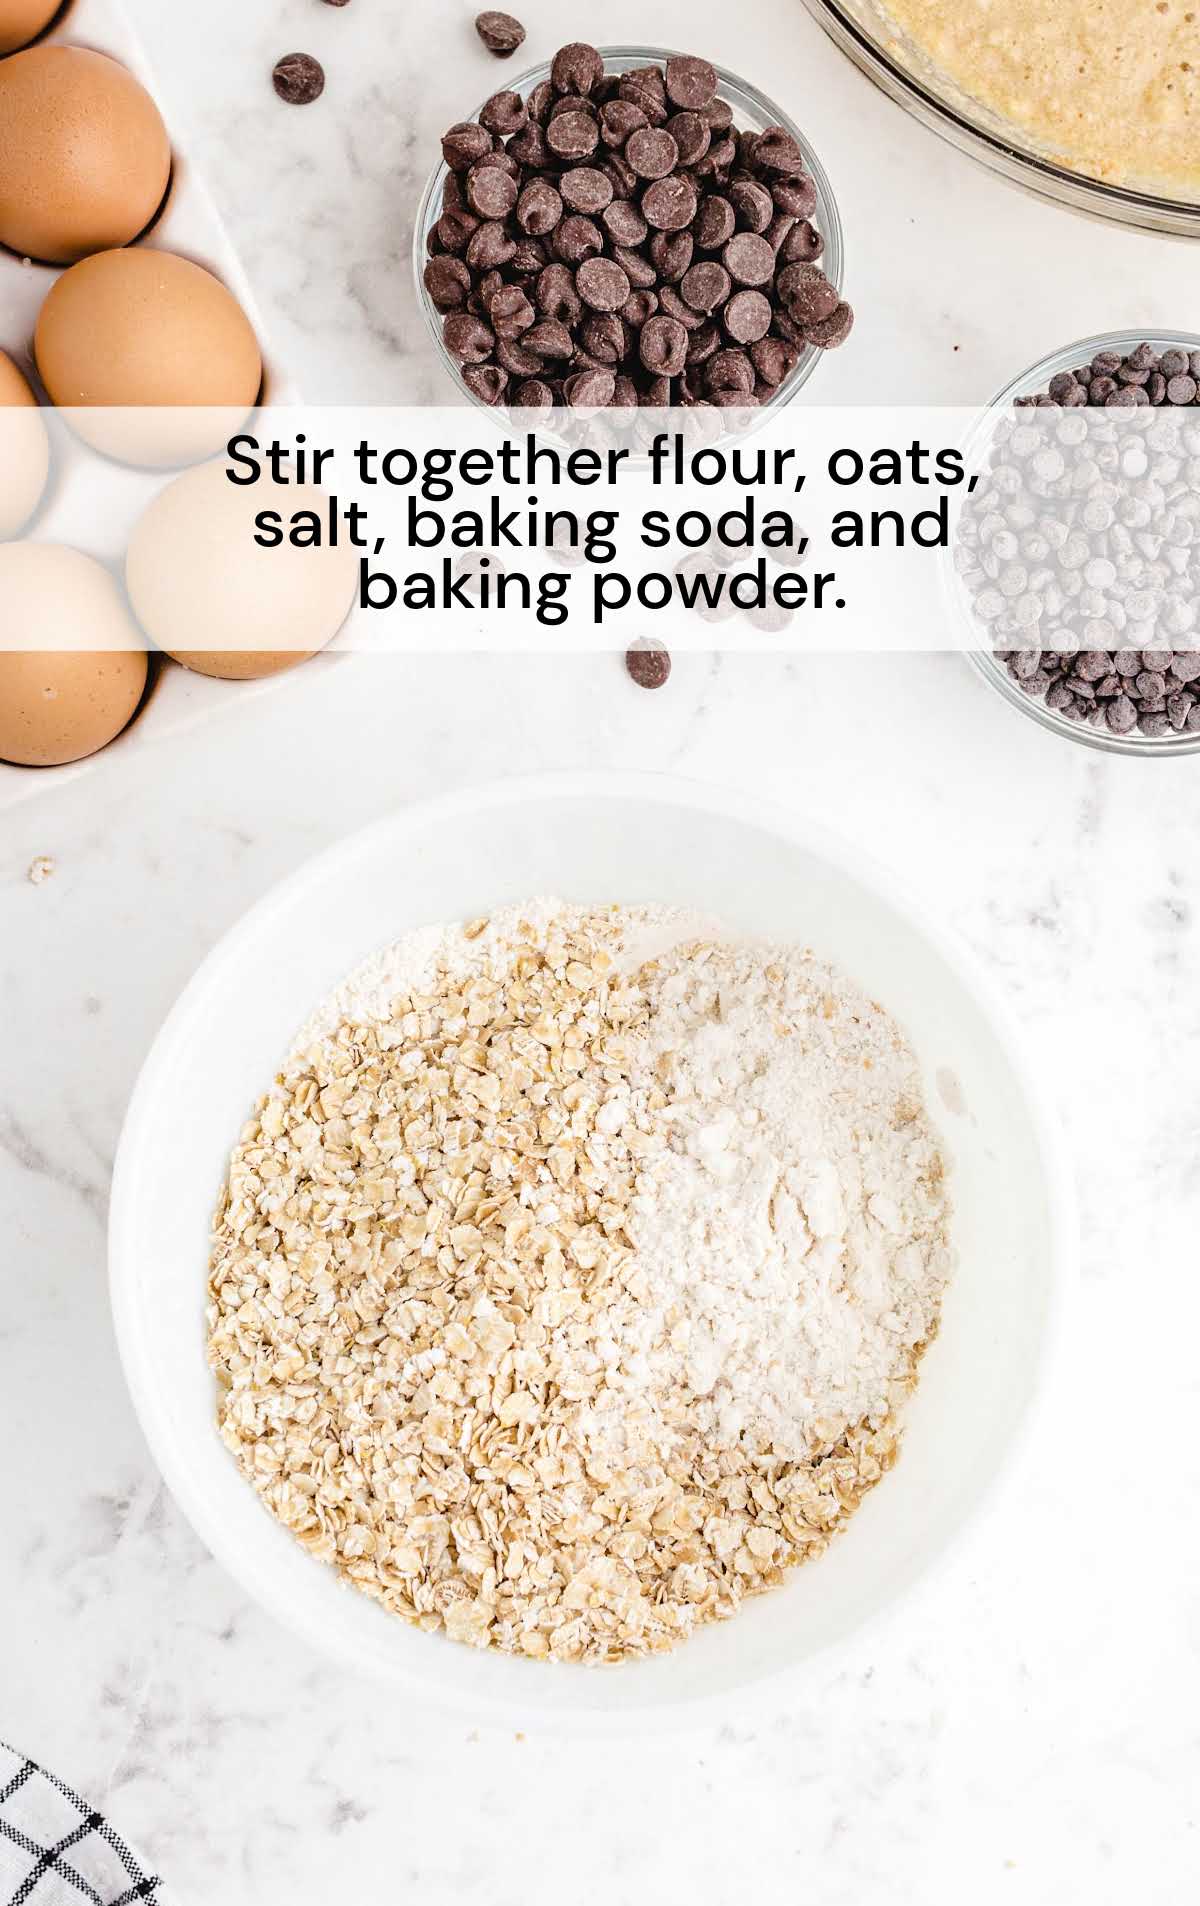 flour, oats, salt, baking soda, and baking powder stirred in a bowl